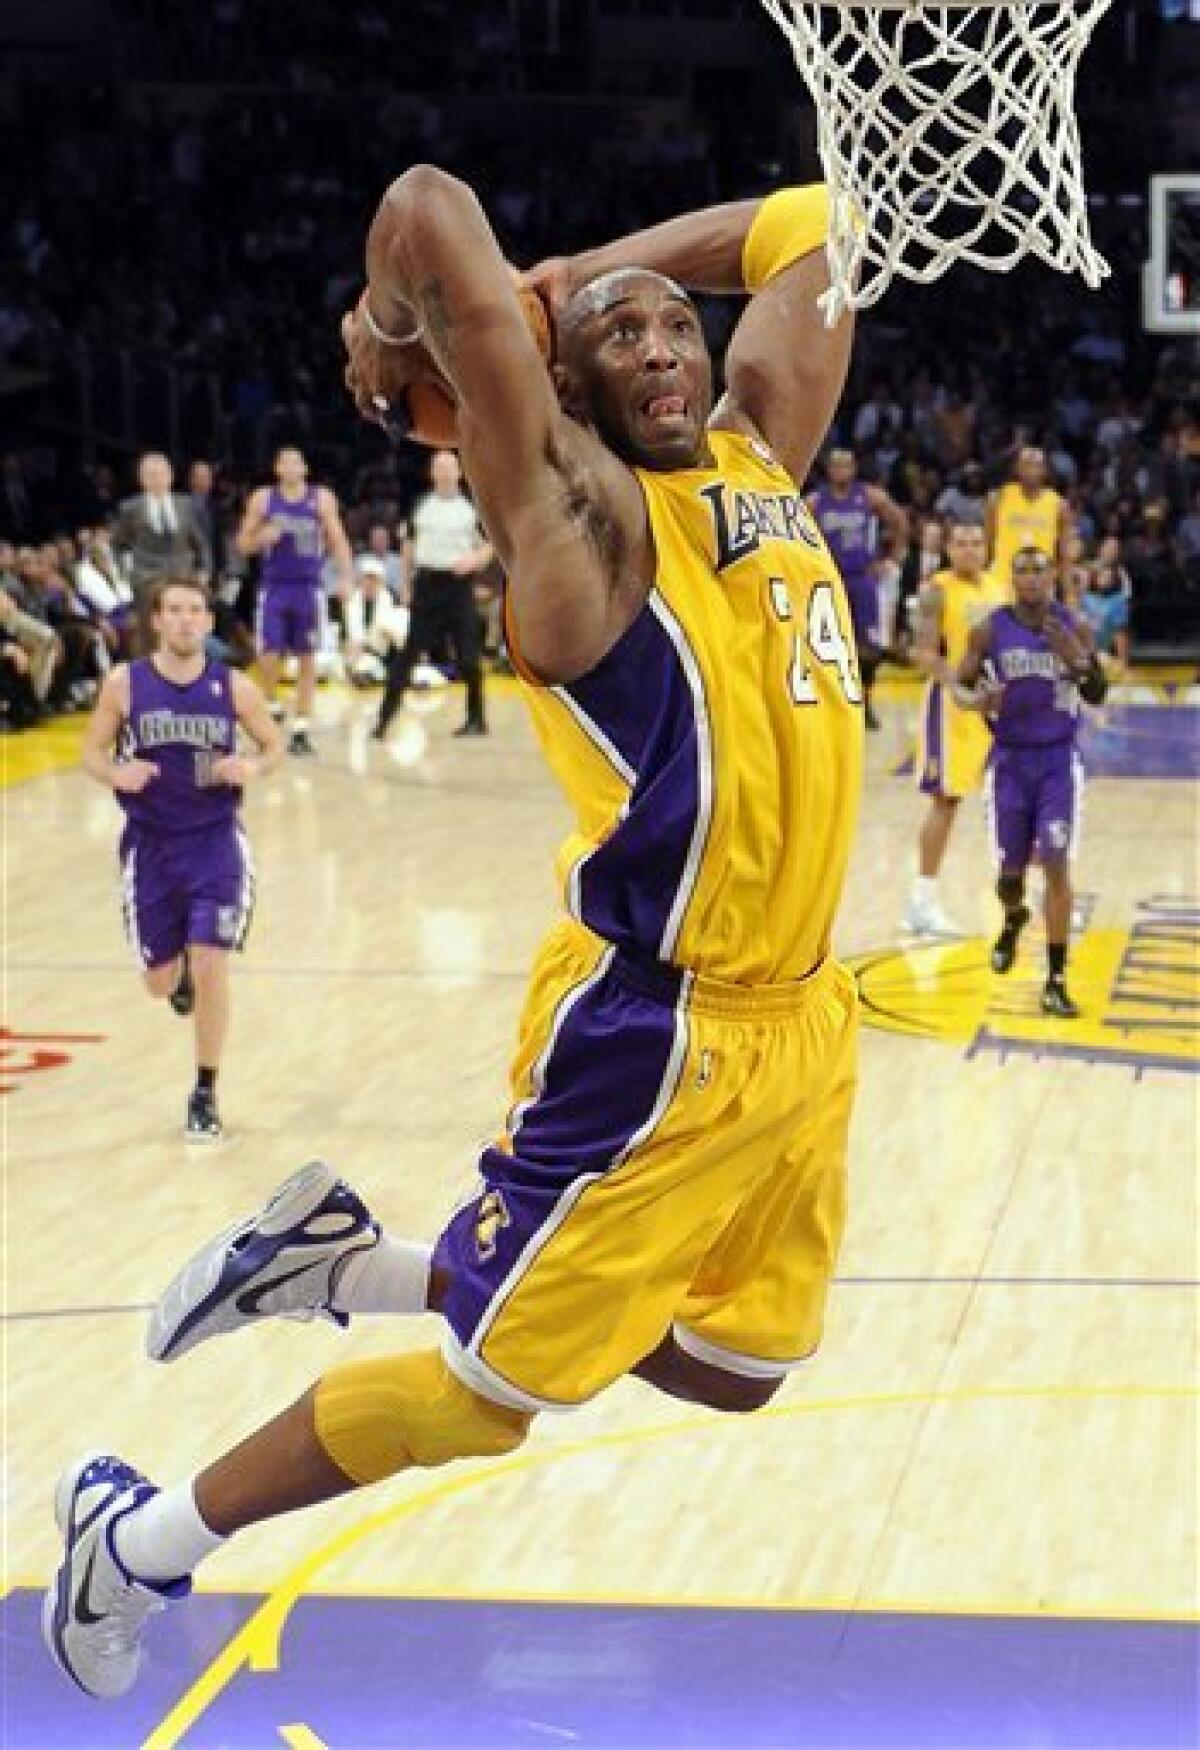 Lakers stun league-leading Warriors without Kobe